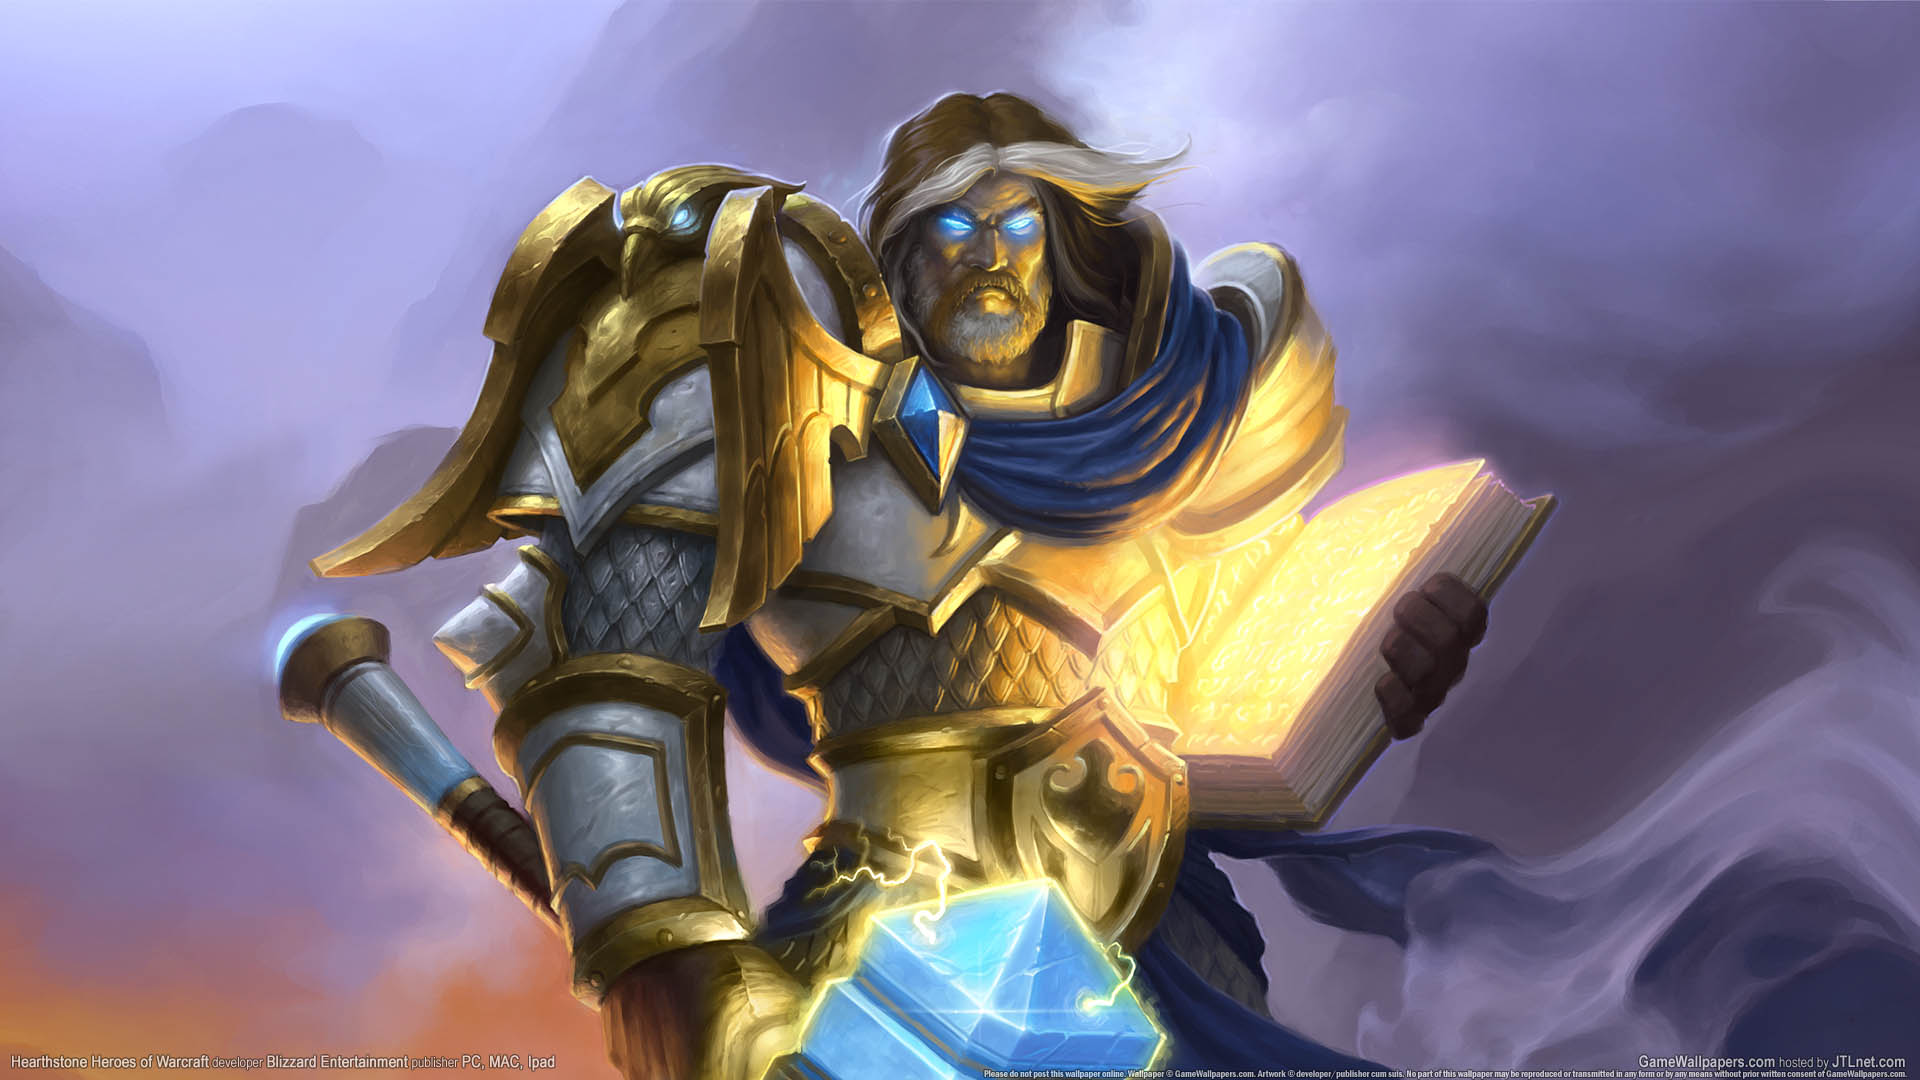 Hearthstone: Heroes of Warcraft fond d'cran 01 1920x1080